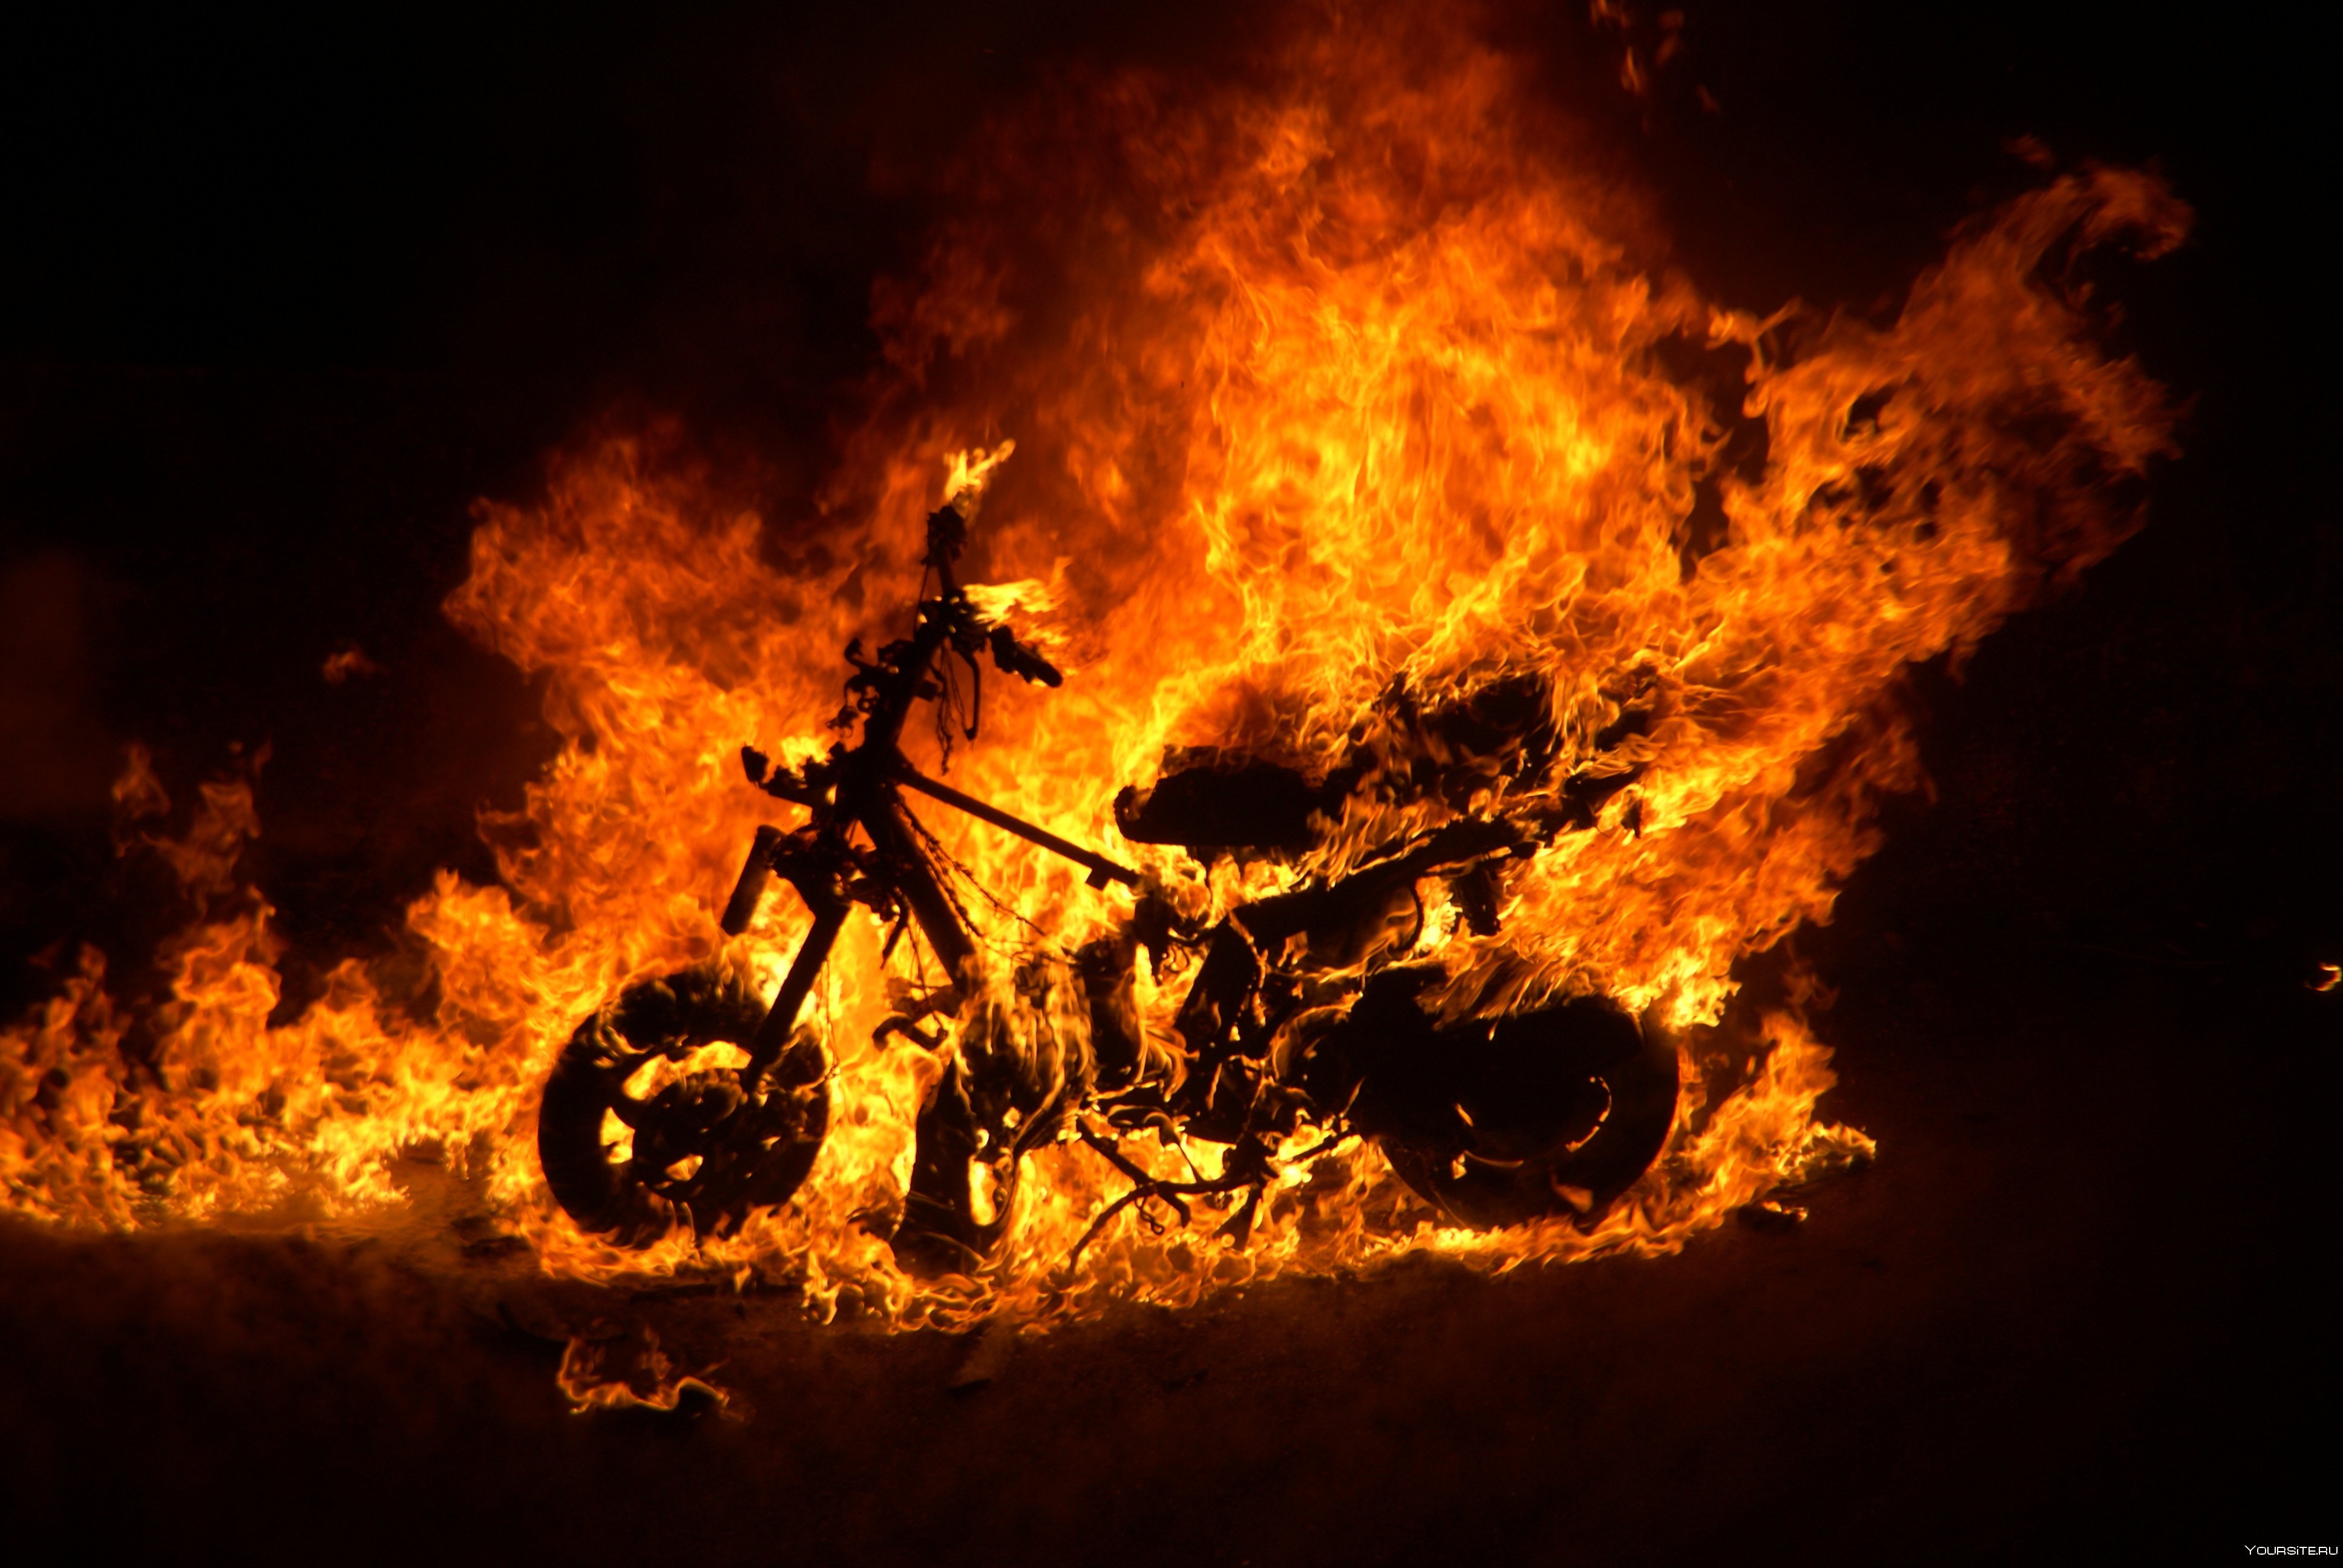 Сгоревший мотоцикл